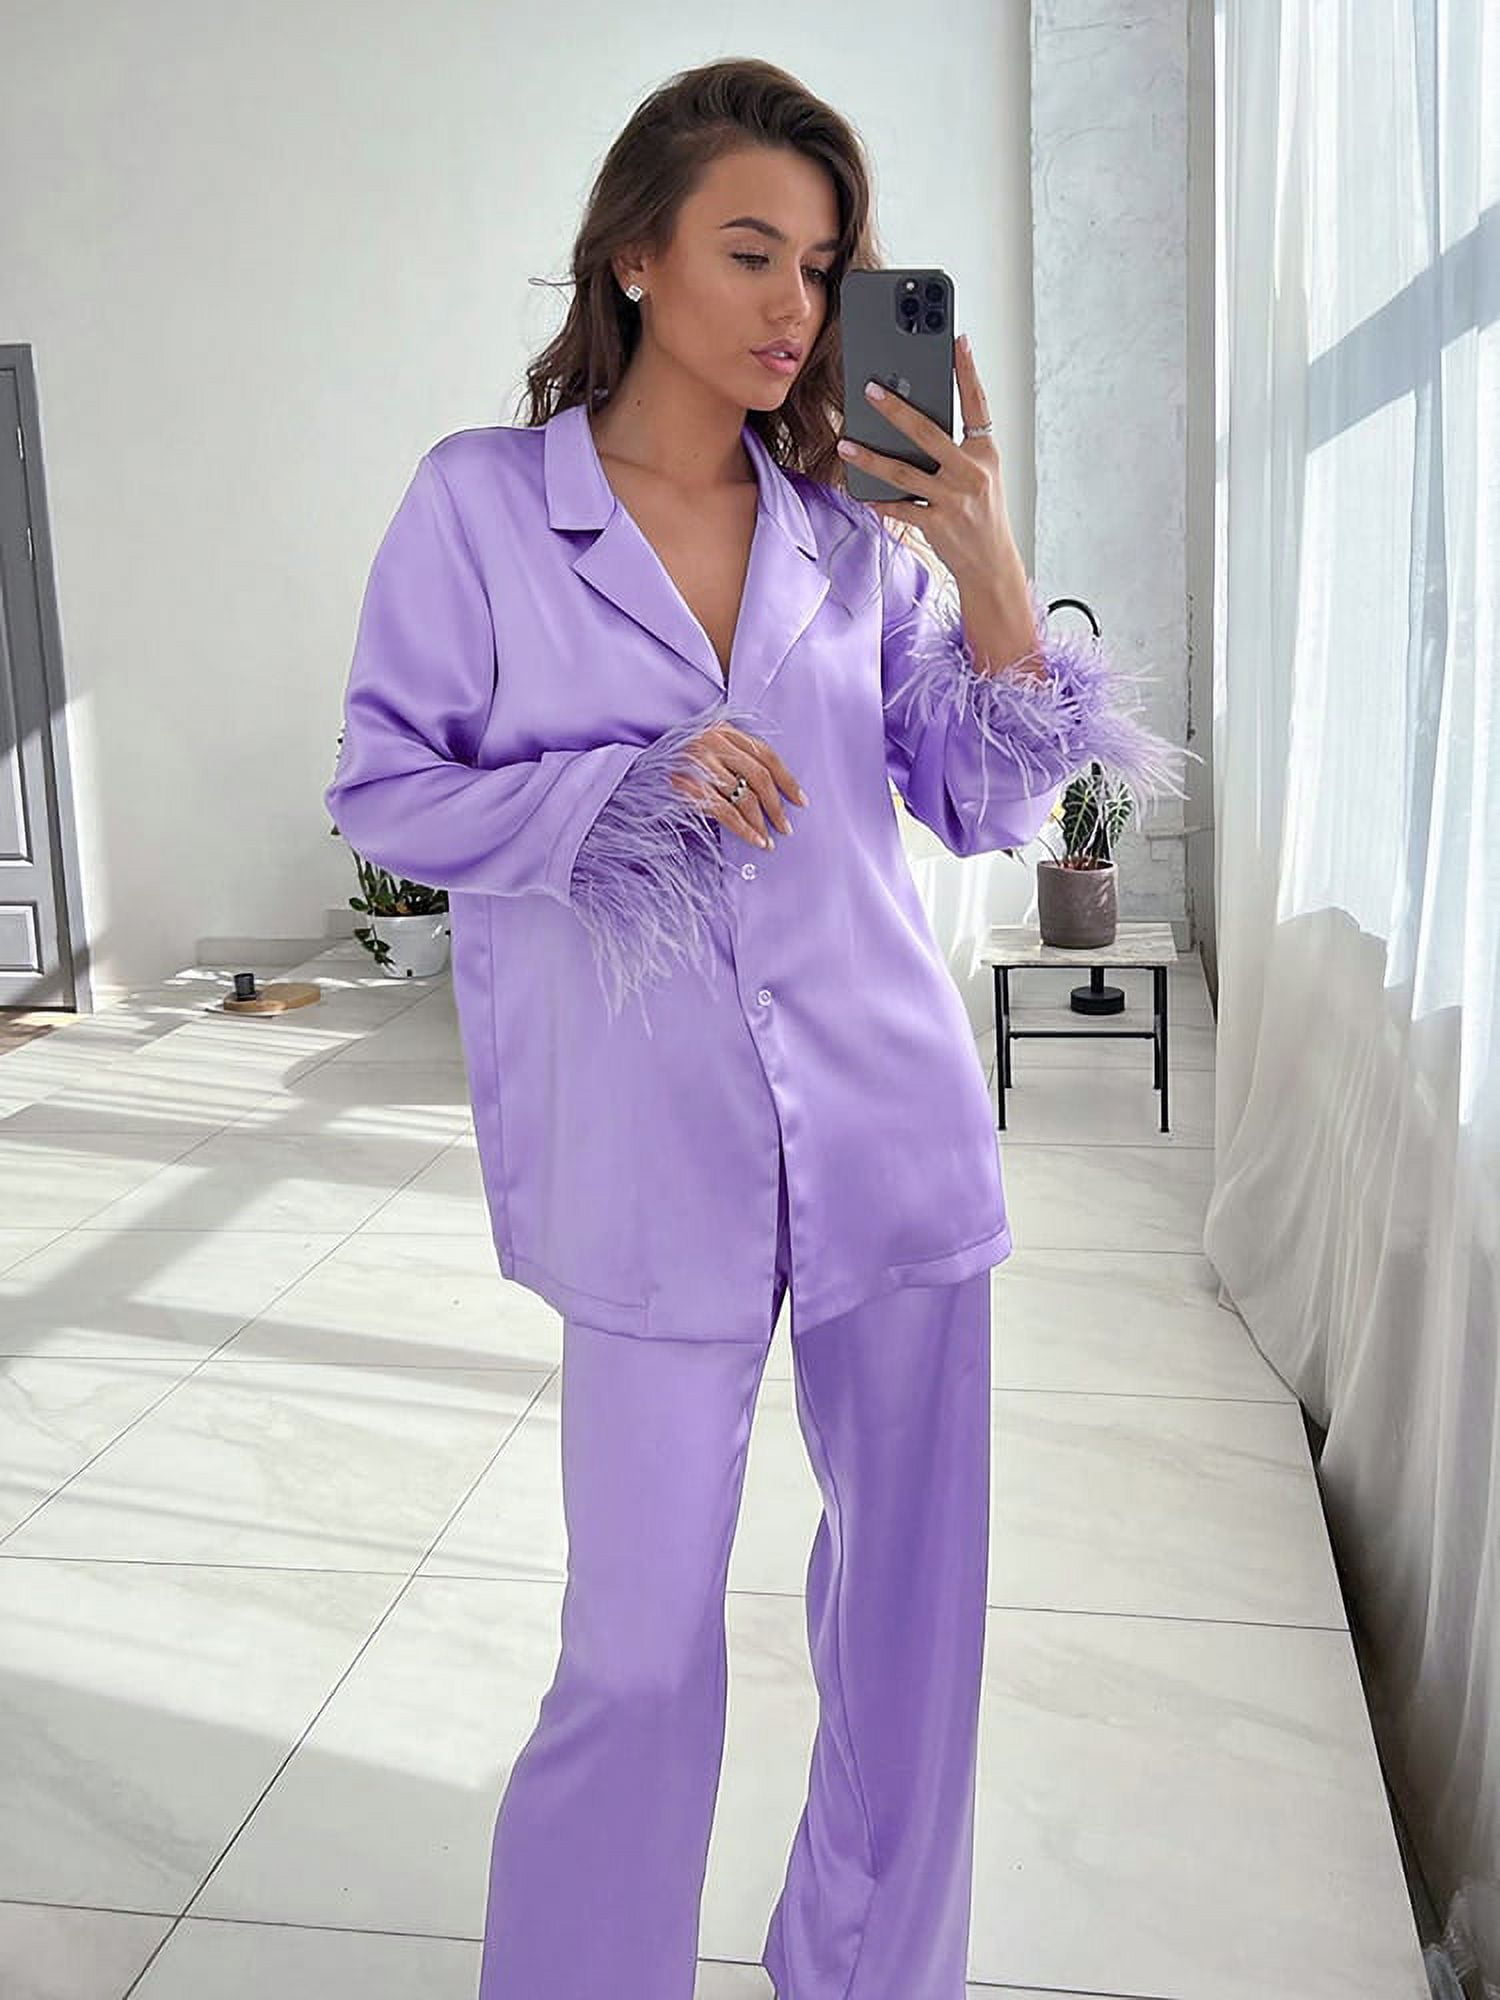  STJDM Nightgown,Winter Purple Women Sleep Pajama Sets Sleepwear  Suits Nightwear Plus Size 2 Piece Nightgown Stars Keep Warm M Purple :  Clothing, Shoes & Jewelry